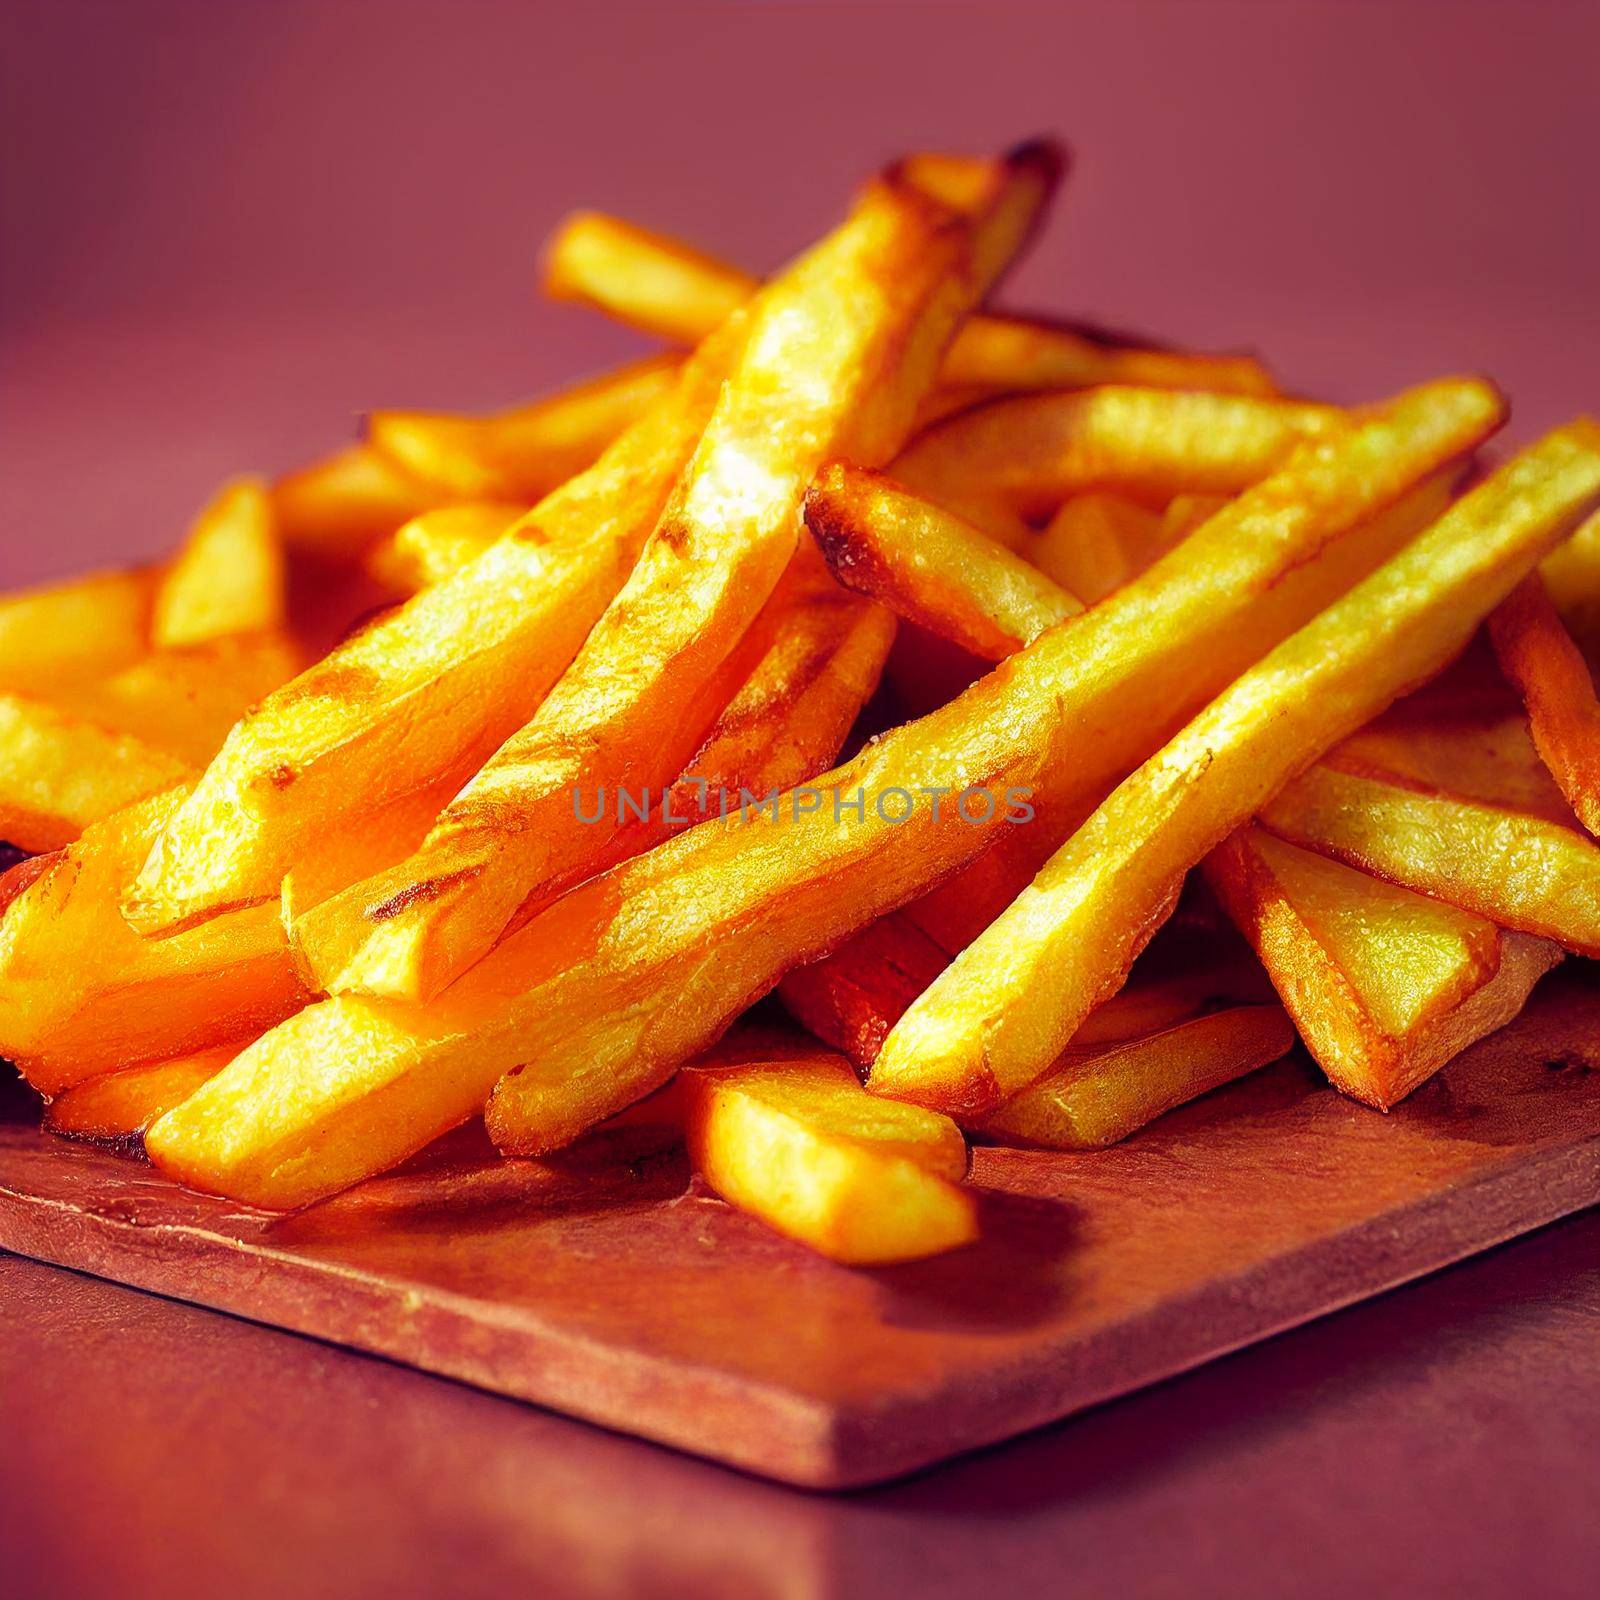 Tasty fresh hot french fries photorealistic illustration ad